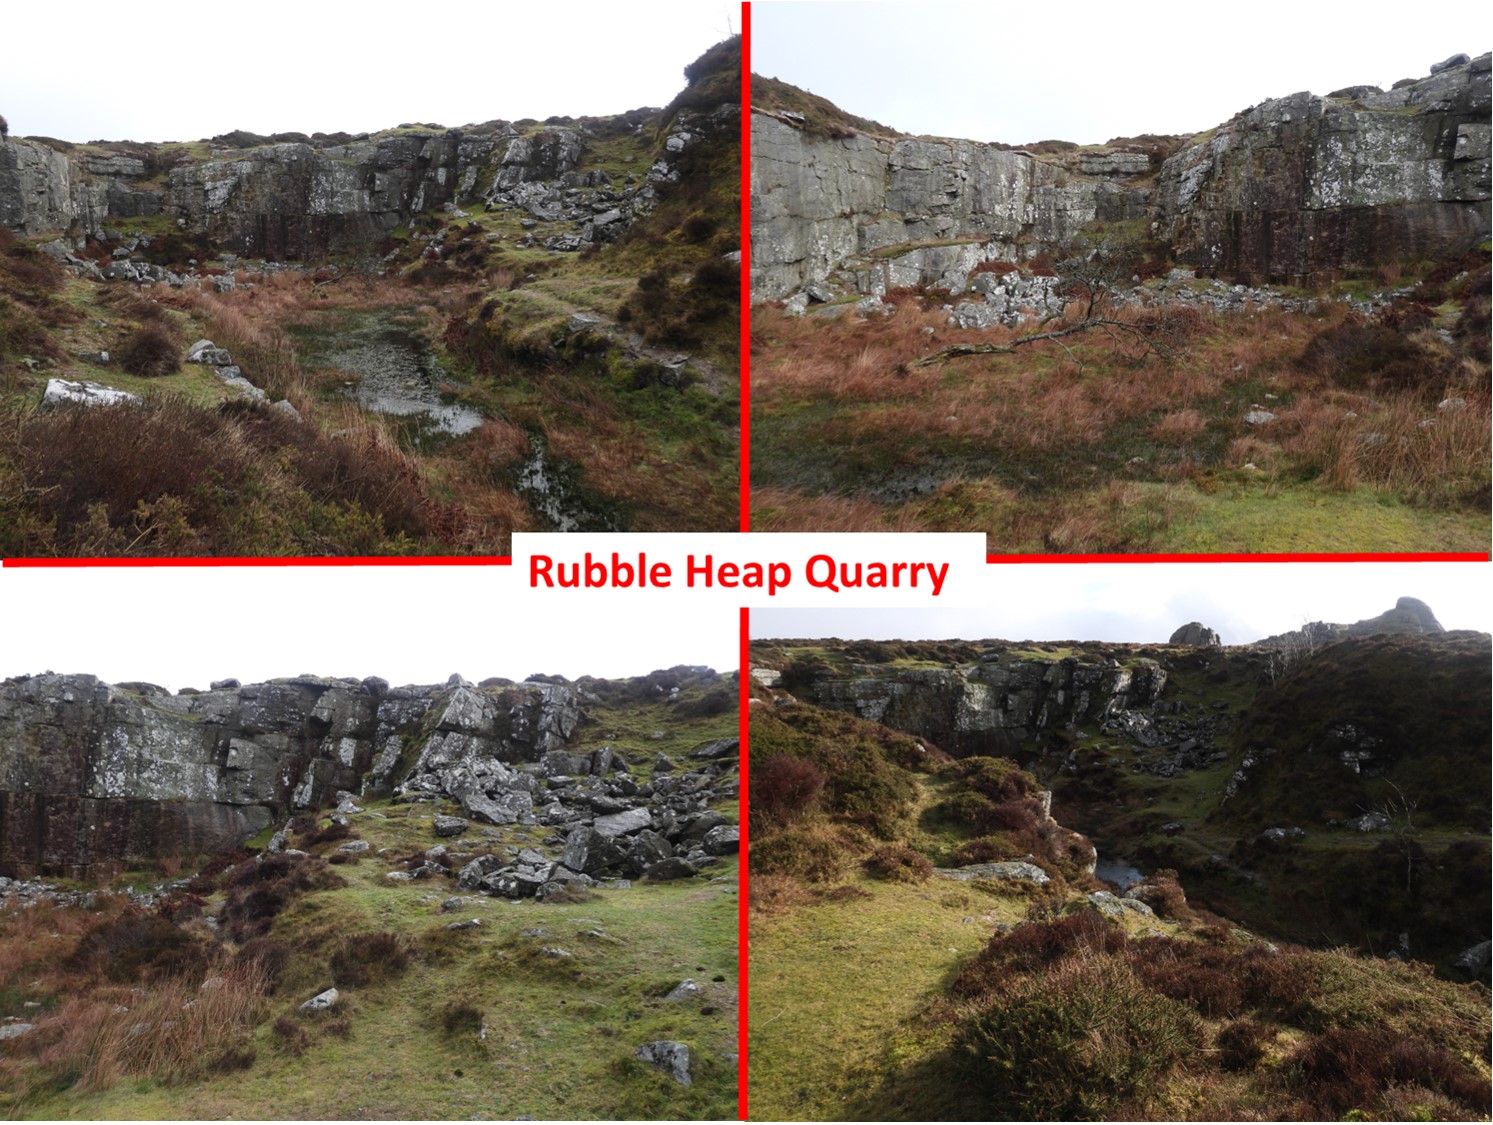 23b. Rubble Heap Quarry